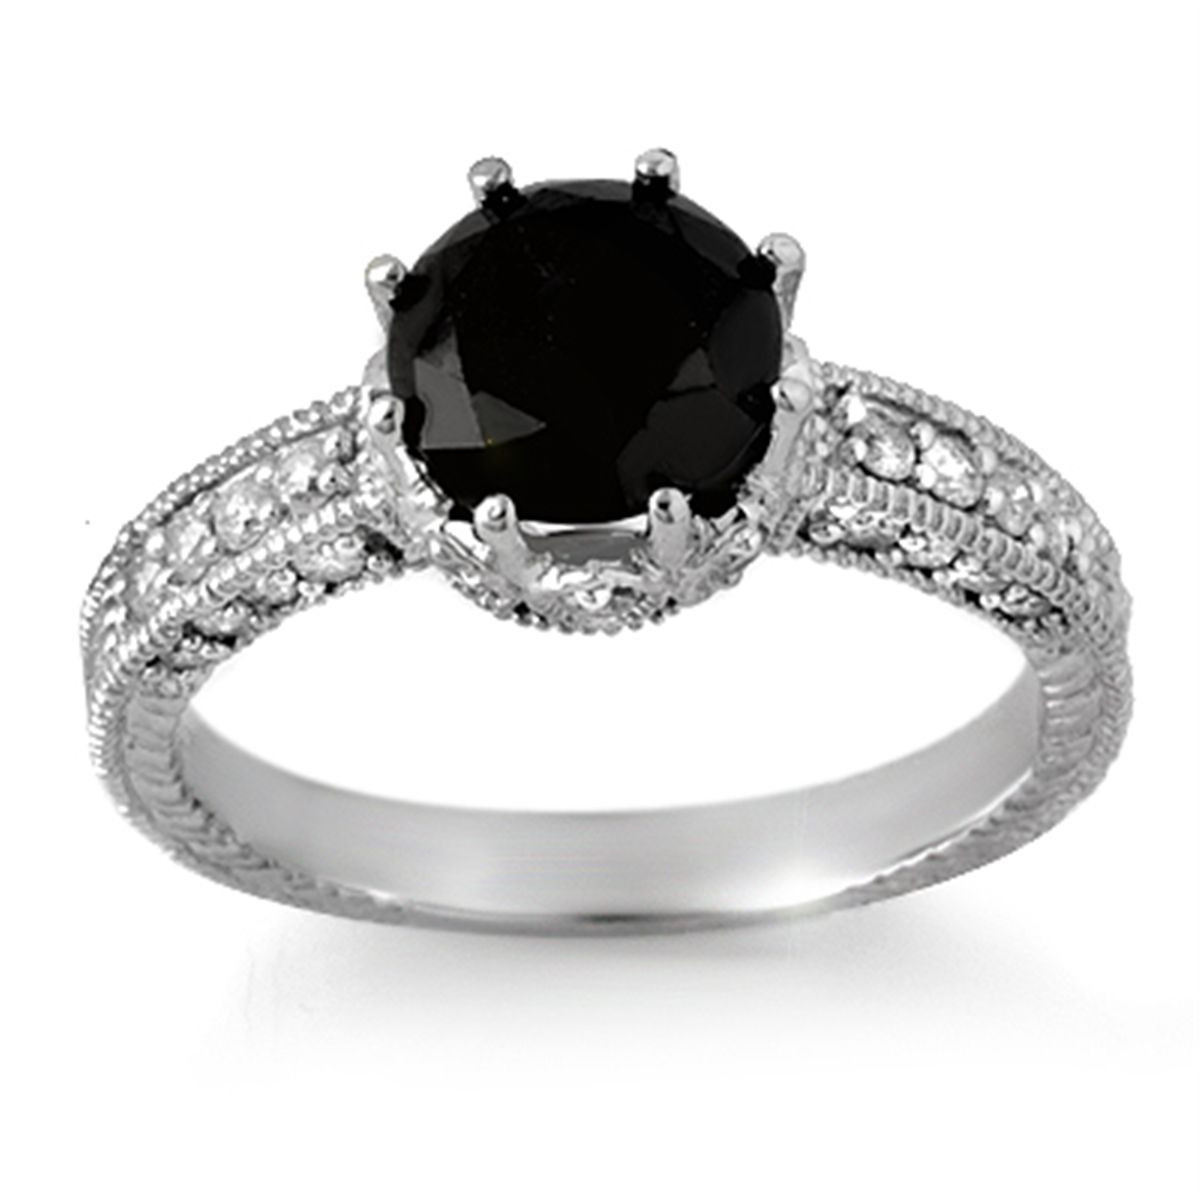 Black Diamond Ring Engagement
 The Sensuous Black Diamond Rings